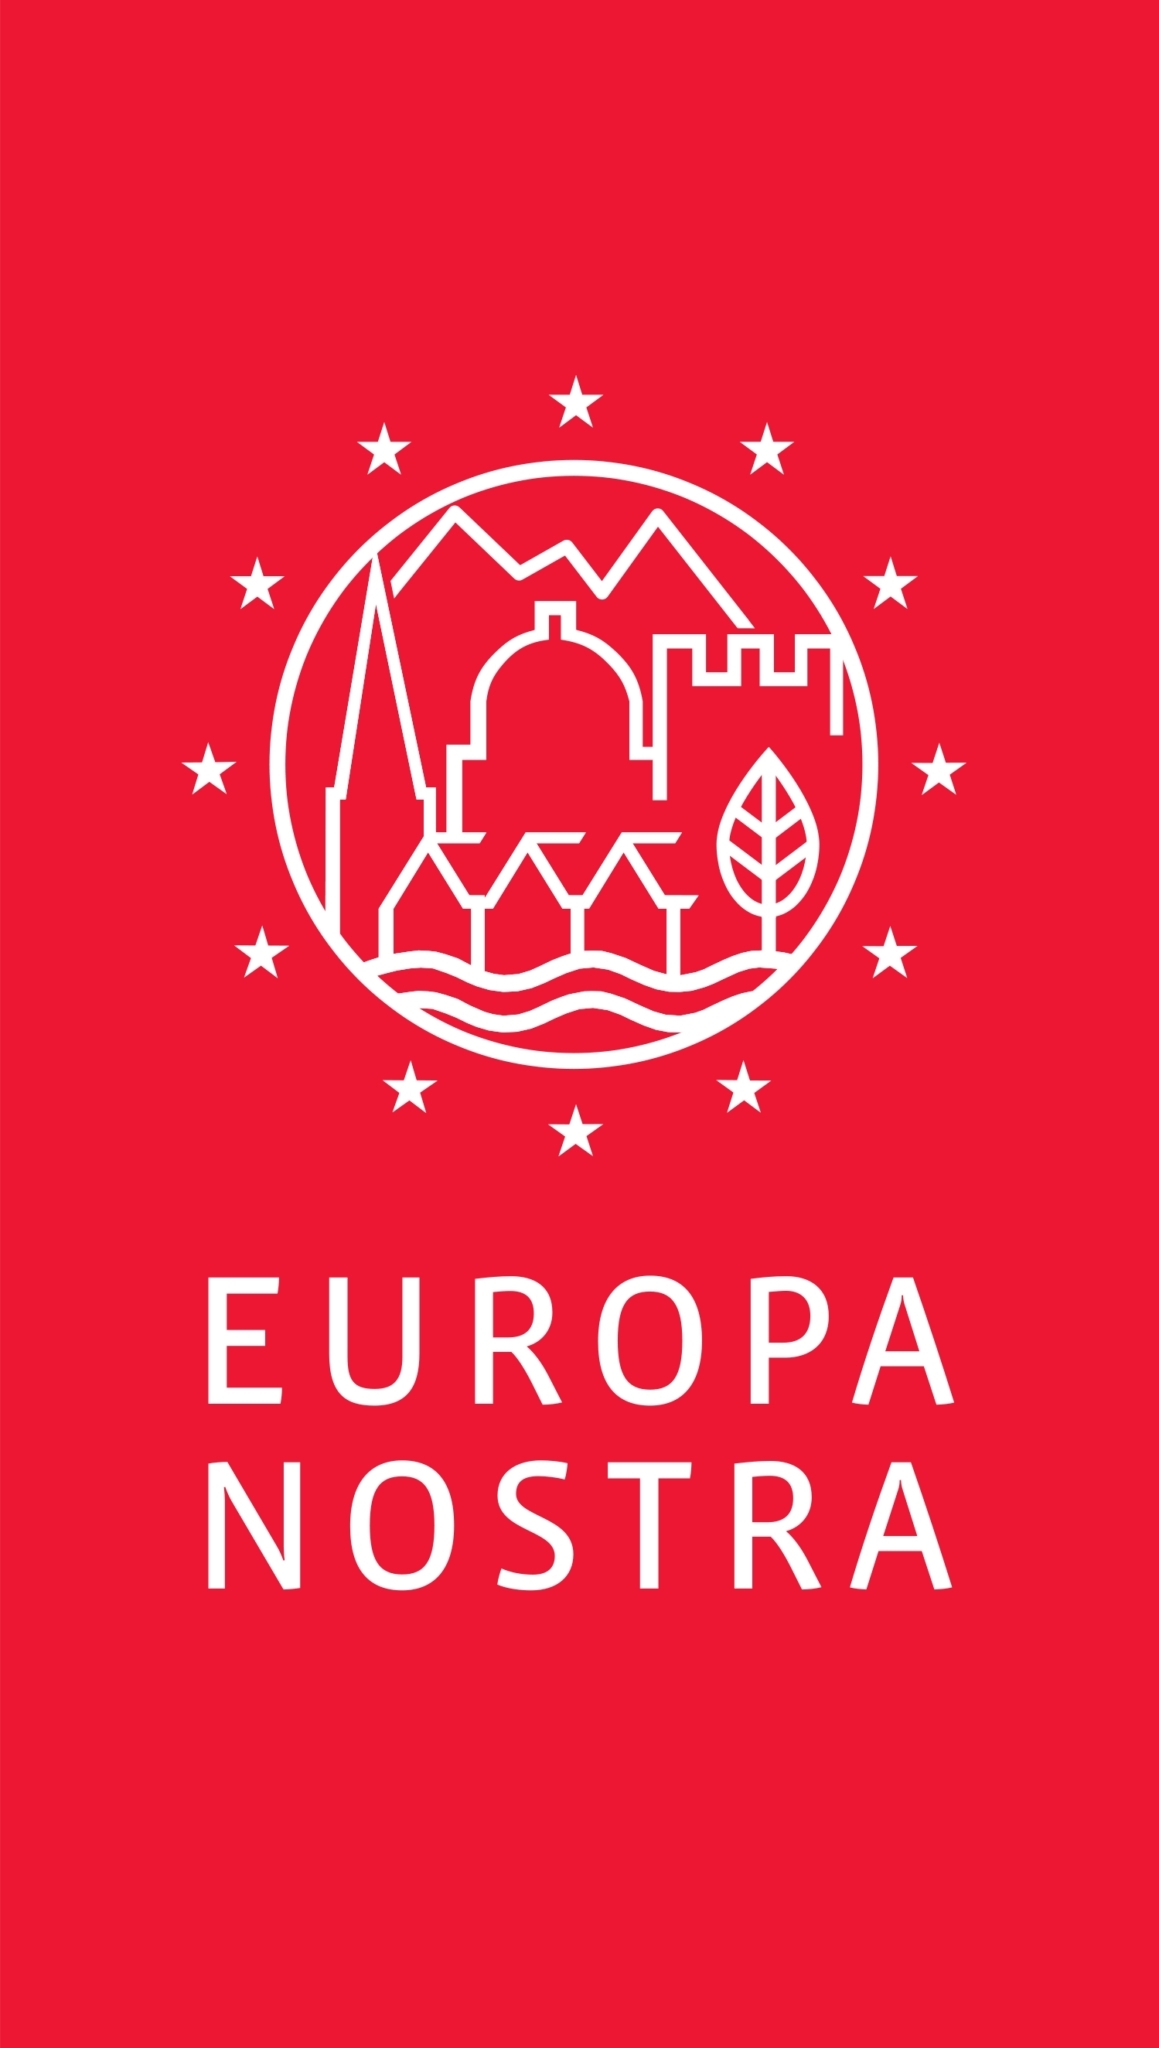 Europa nostra logo red high